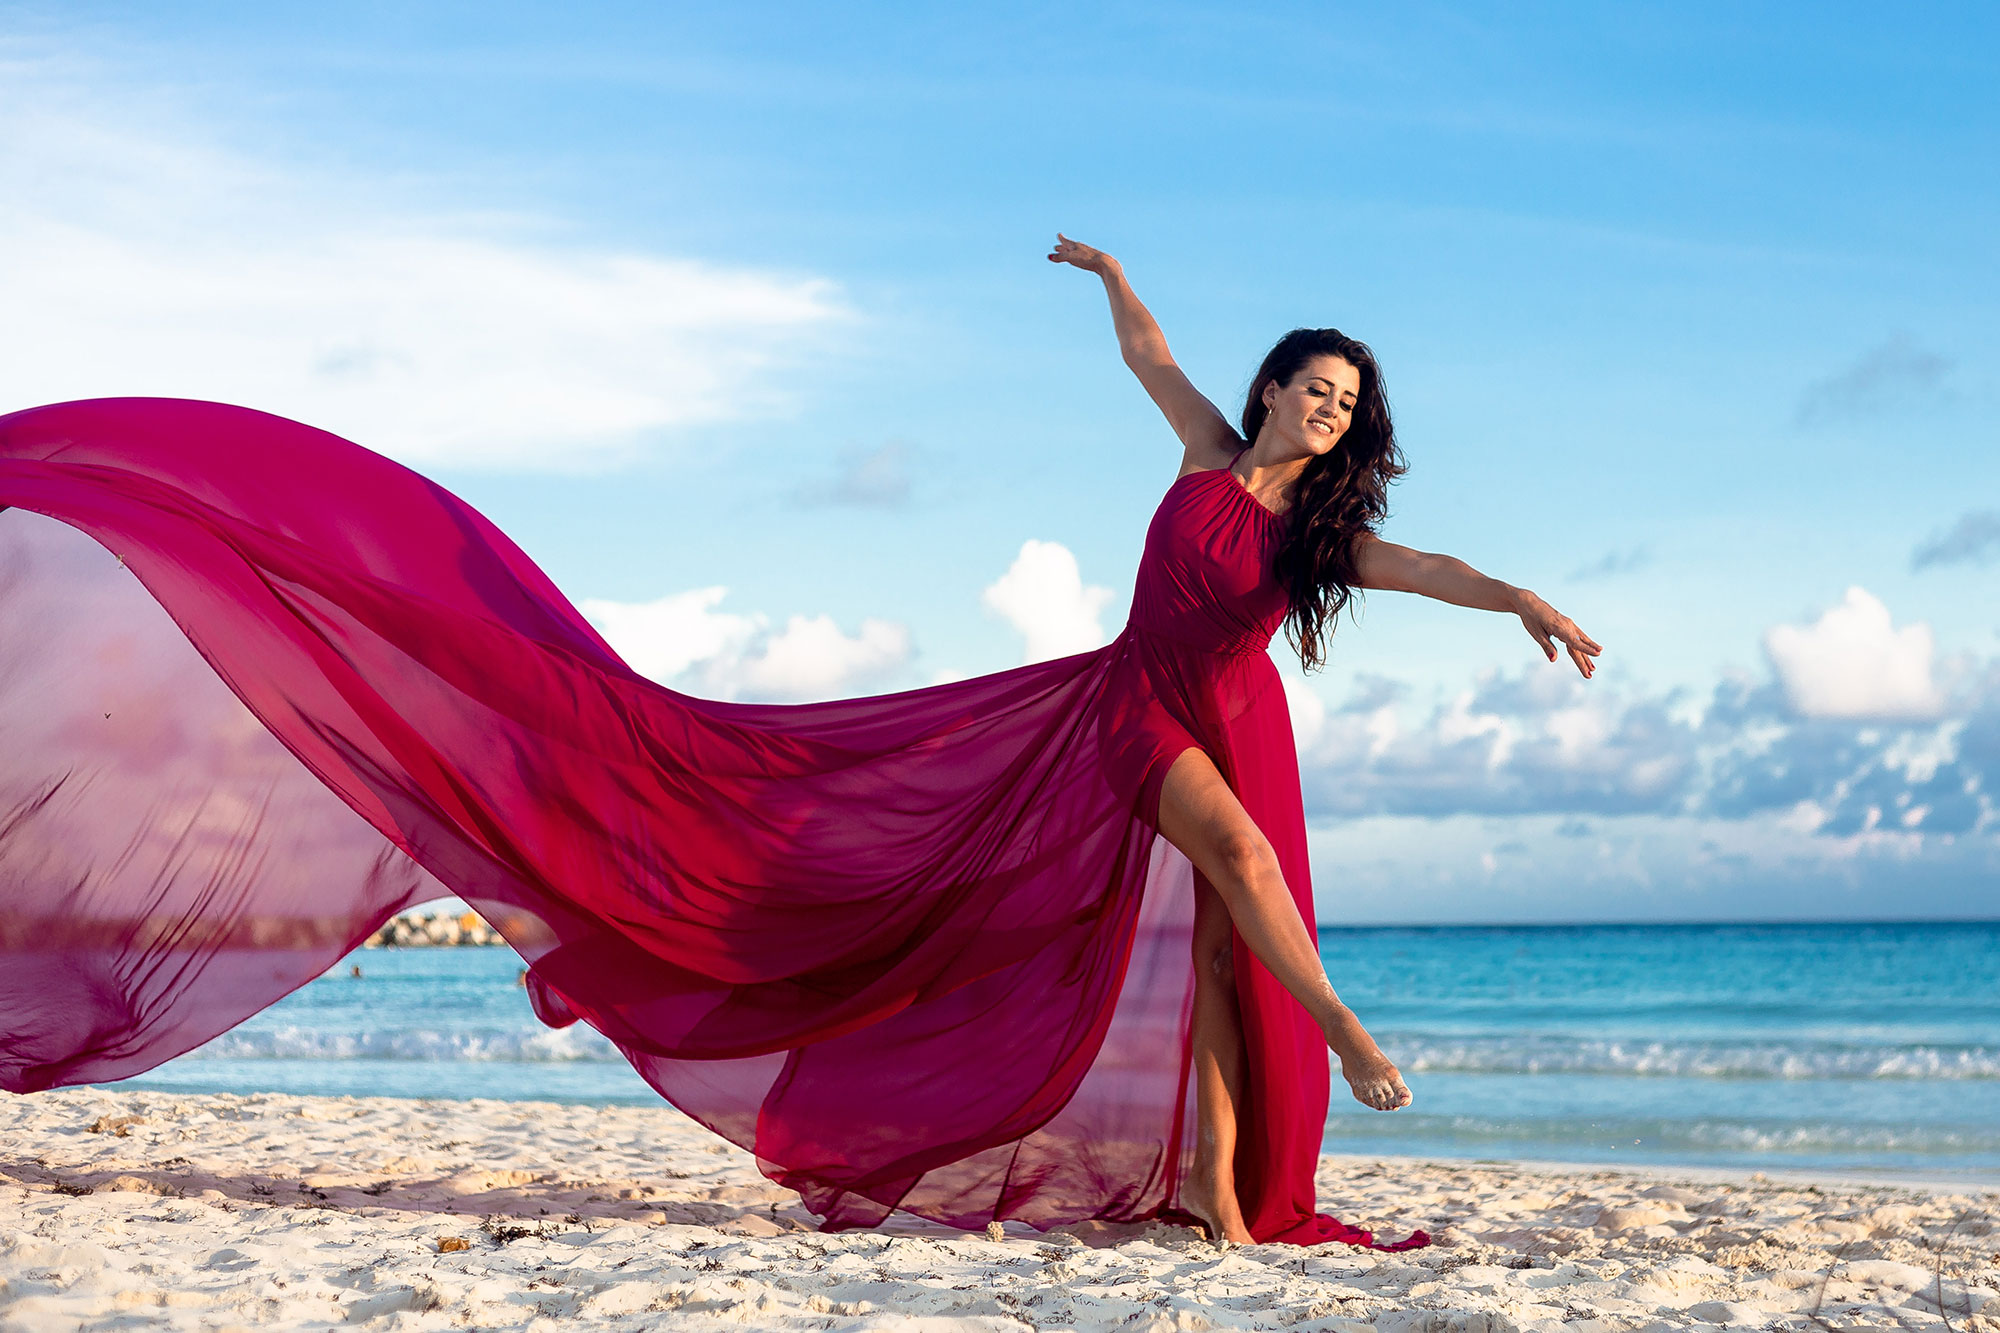 Flying Dress - Cancun Photos